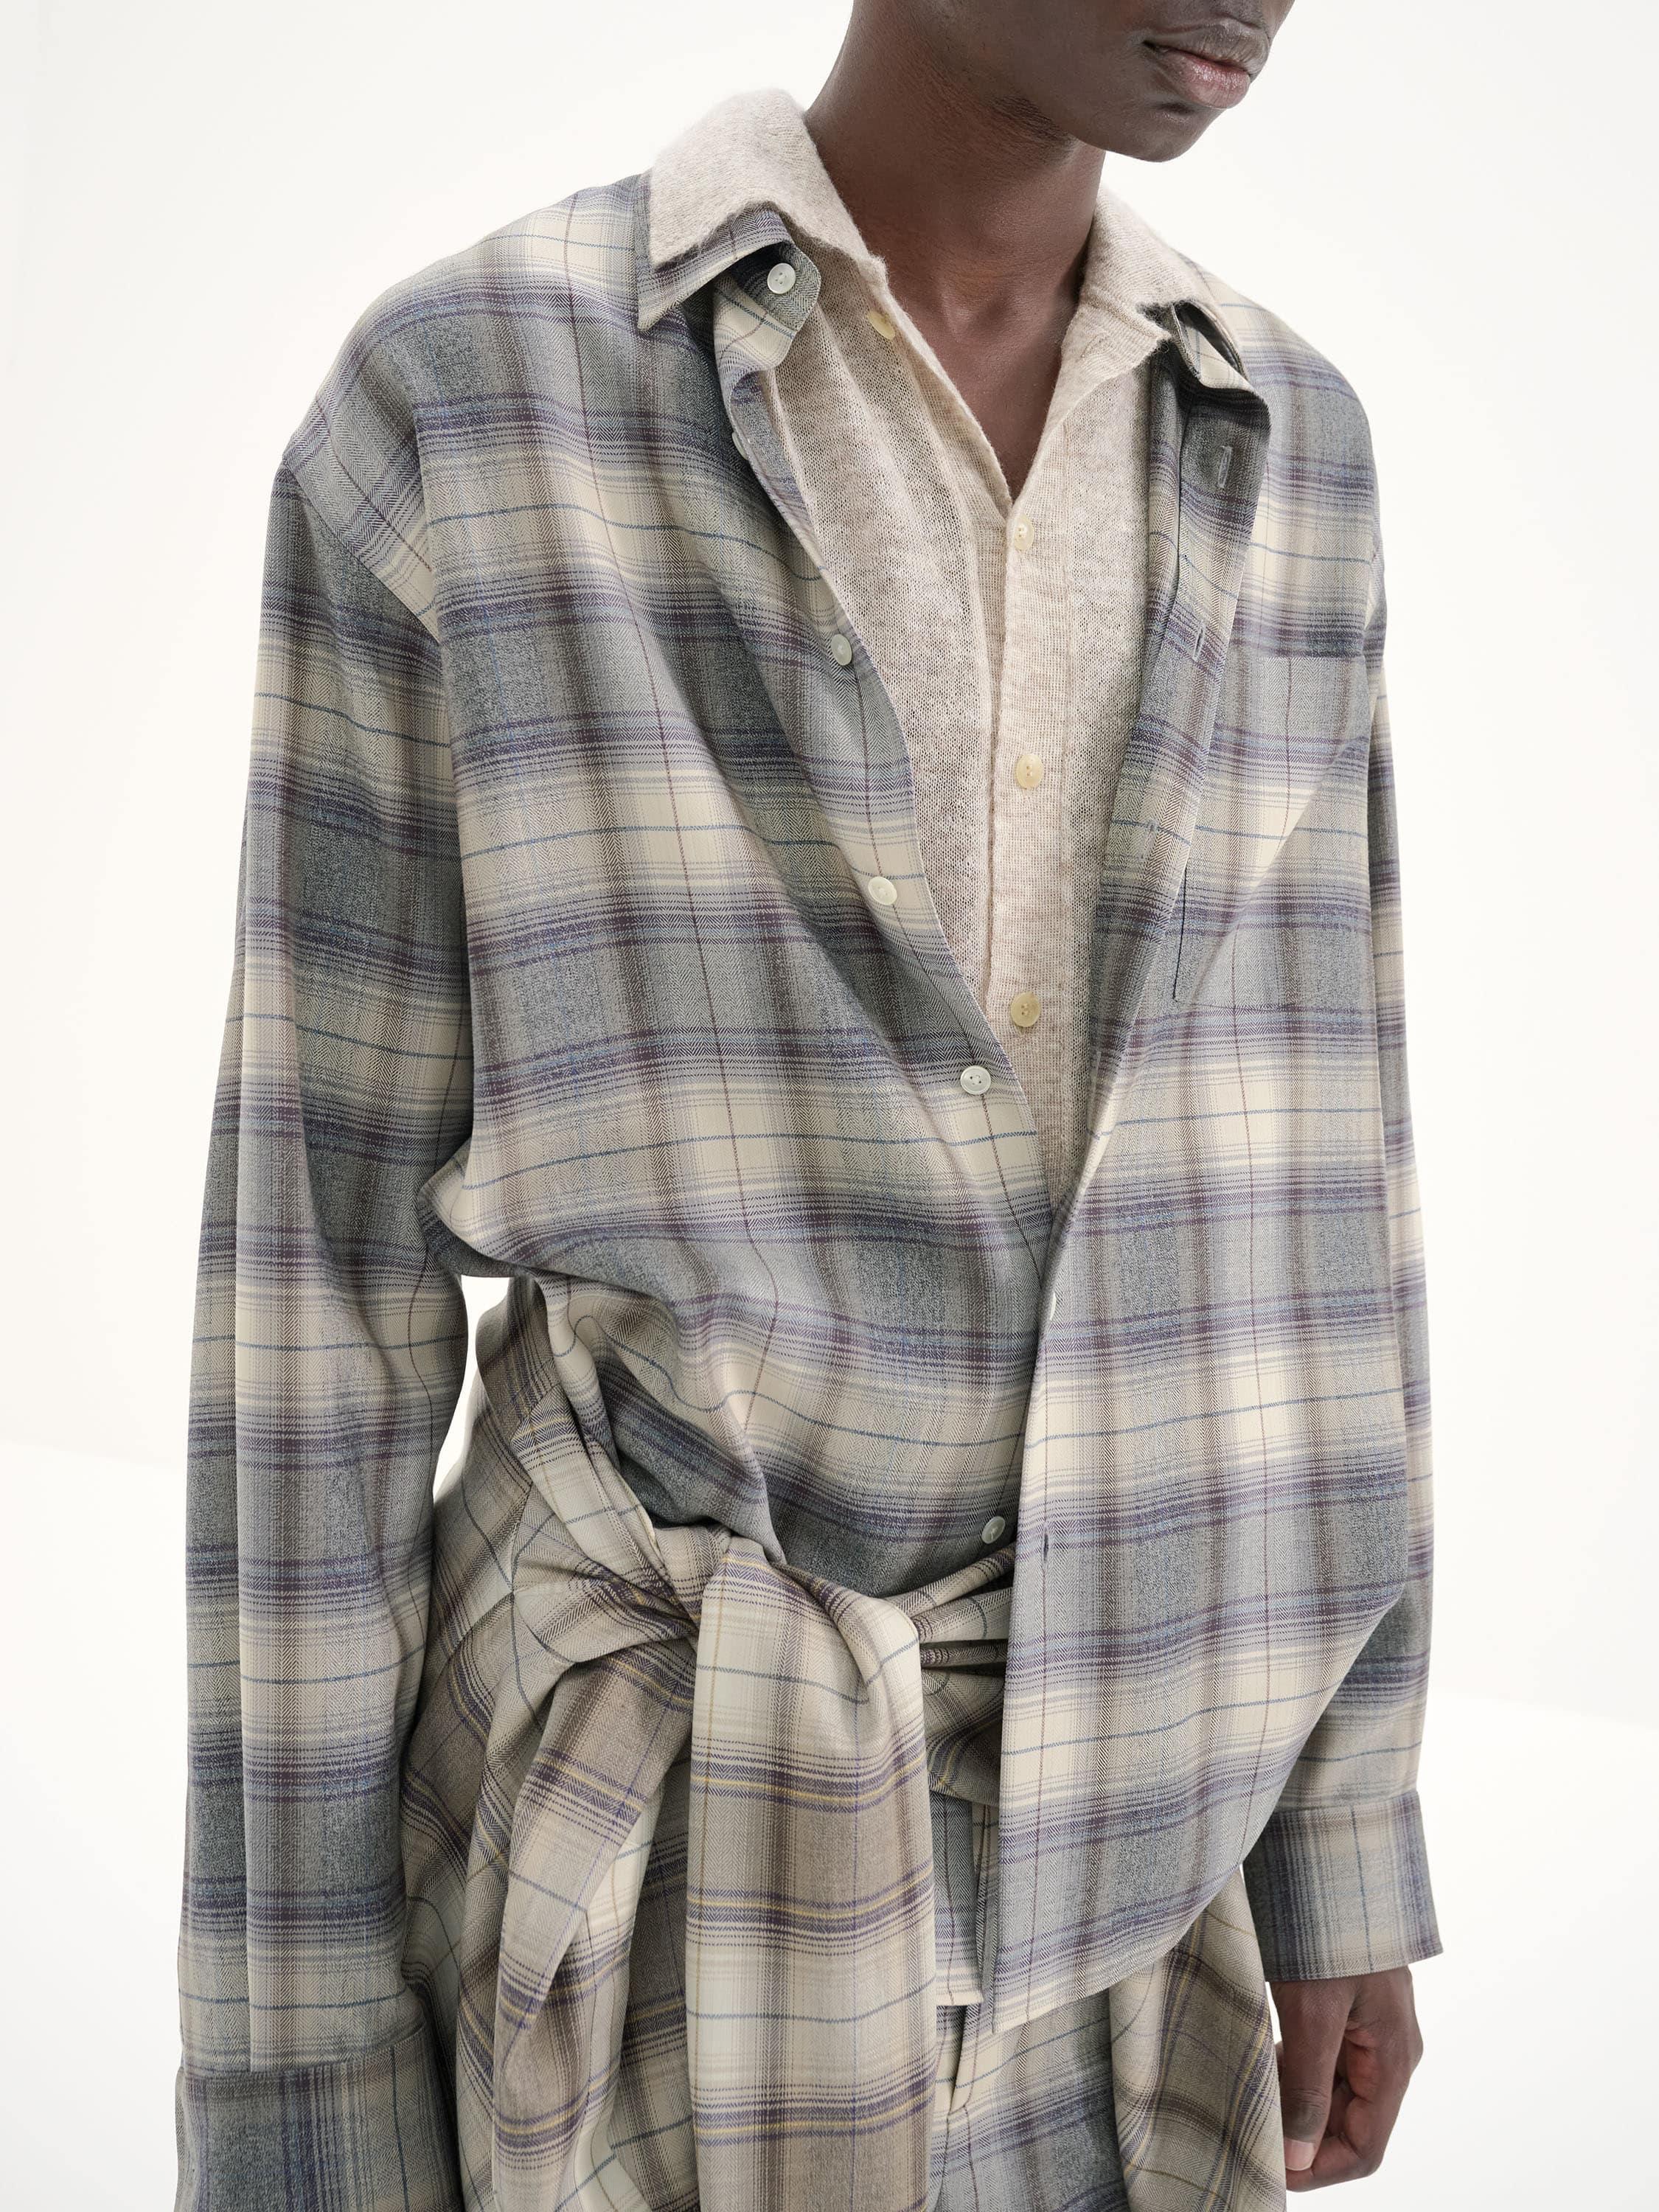 AURALEE Super Light Wool Check Shirt in Natural for Men | Lyst